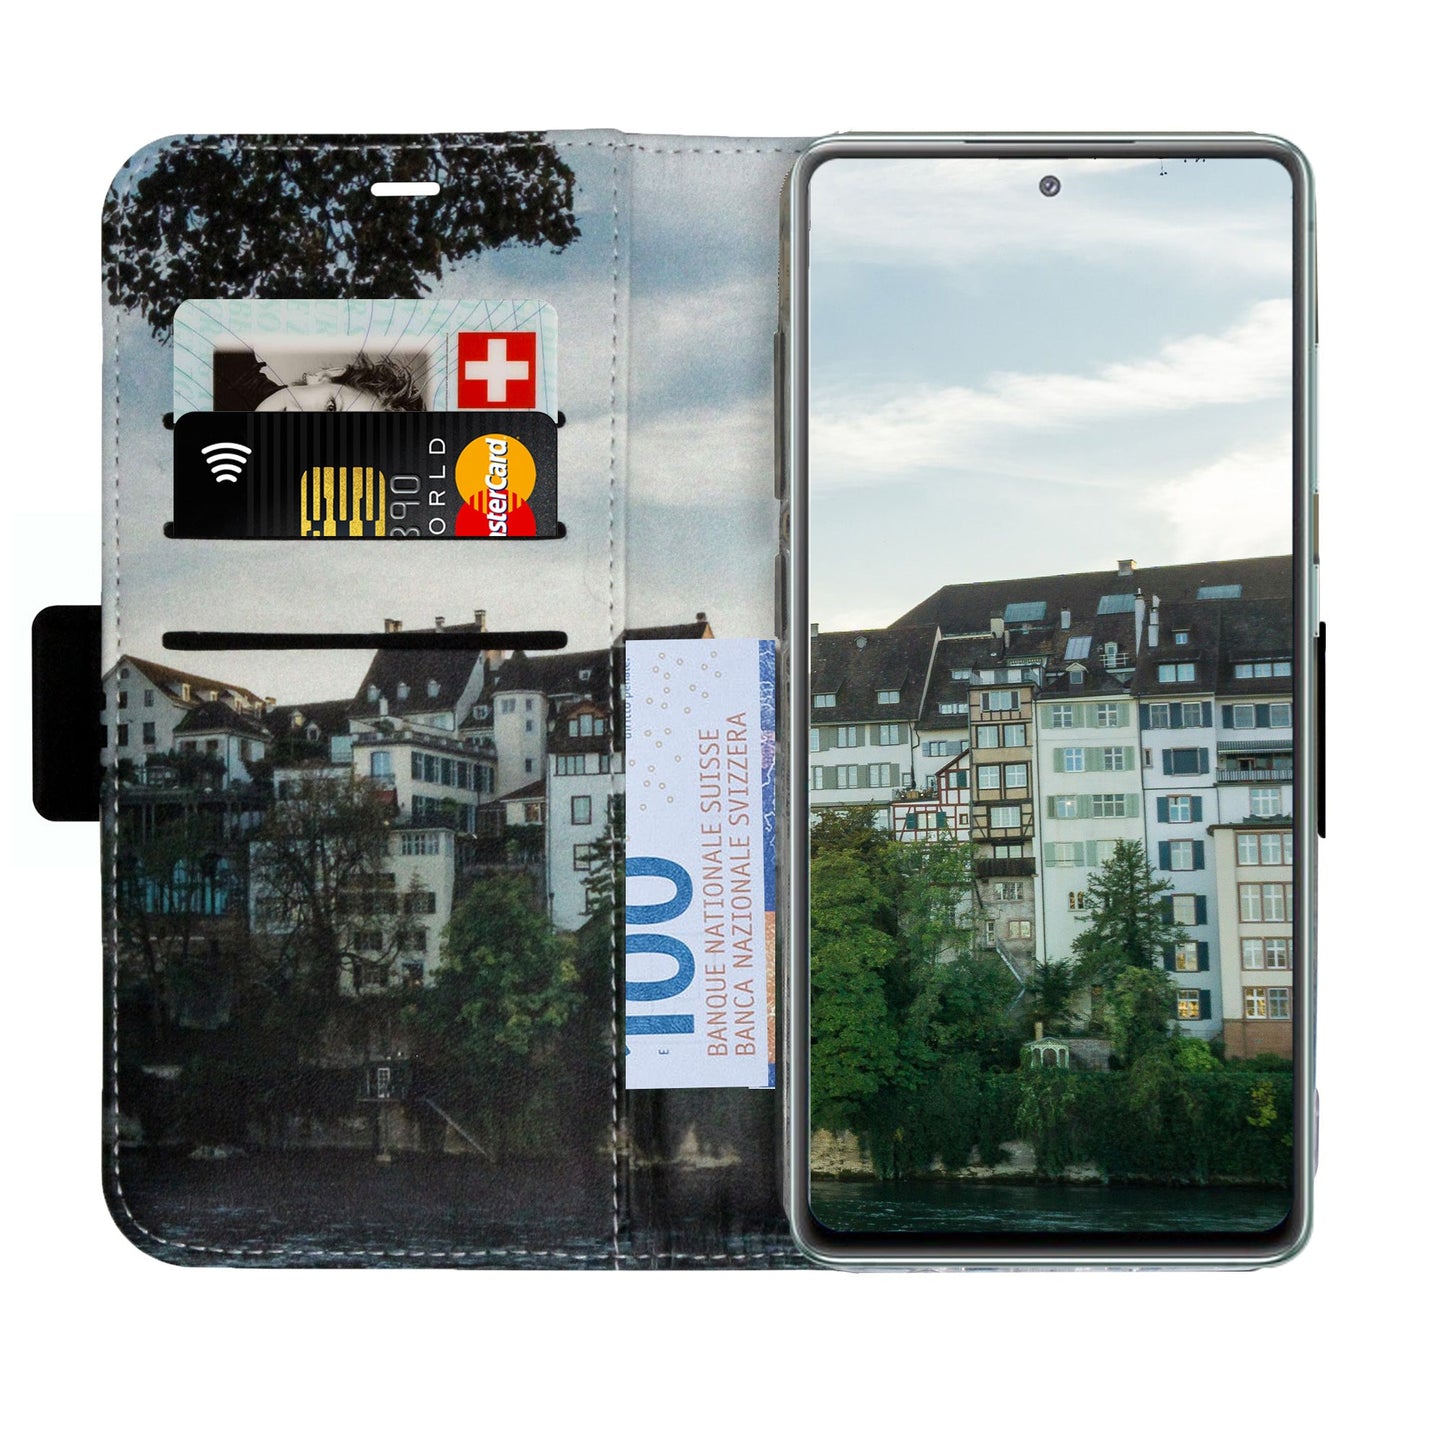 Coque Basel City Rhin Victor pour Samsung Galaxy S20